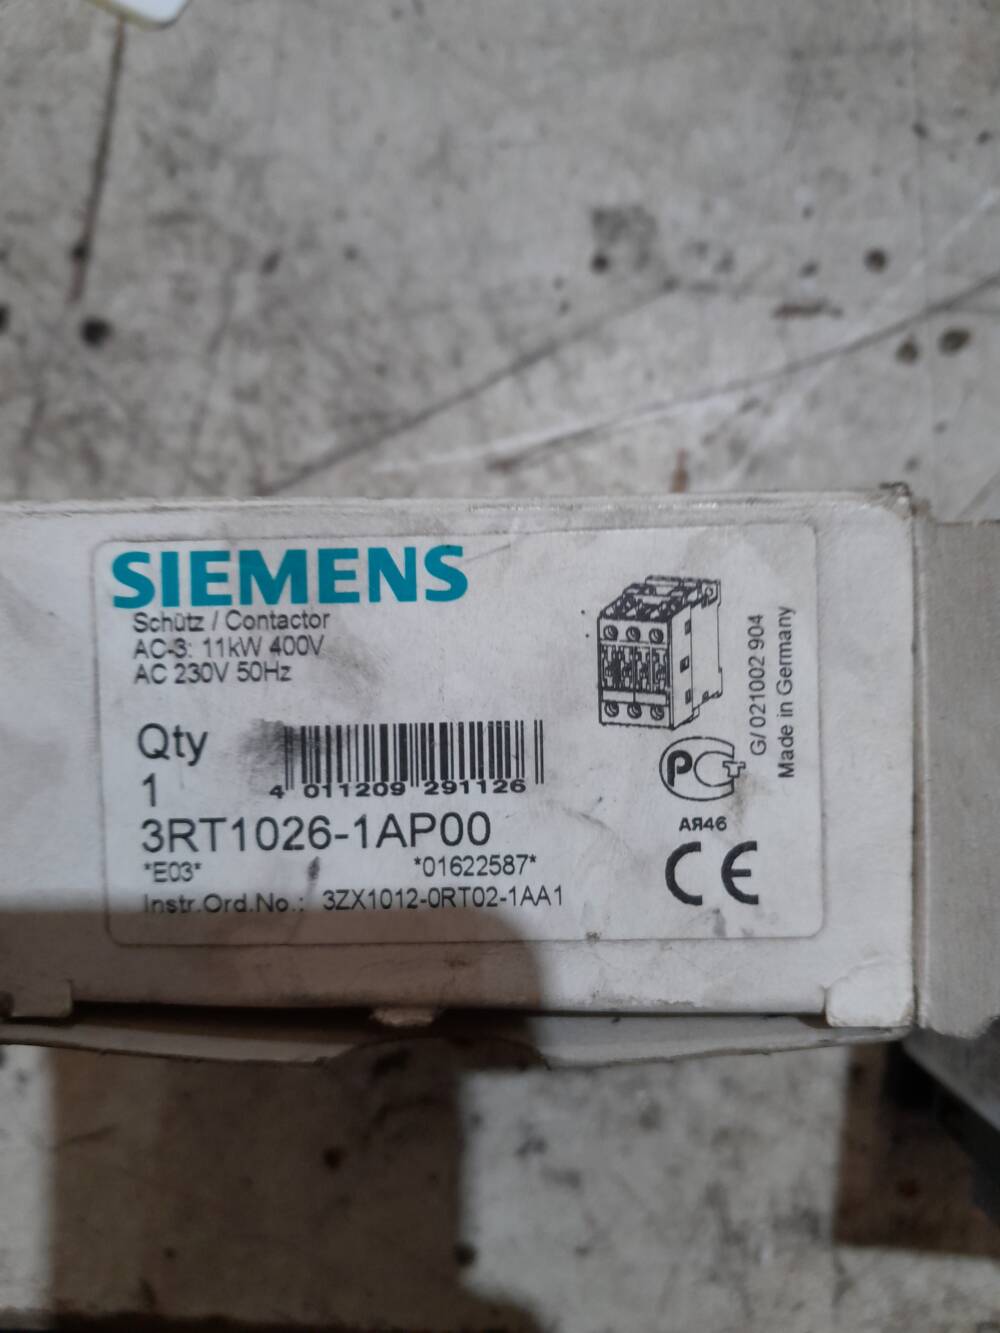 Siemens 3RT1026-1A Siemens Sirius Contactors (New)